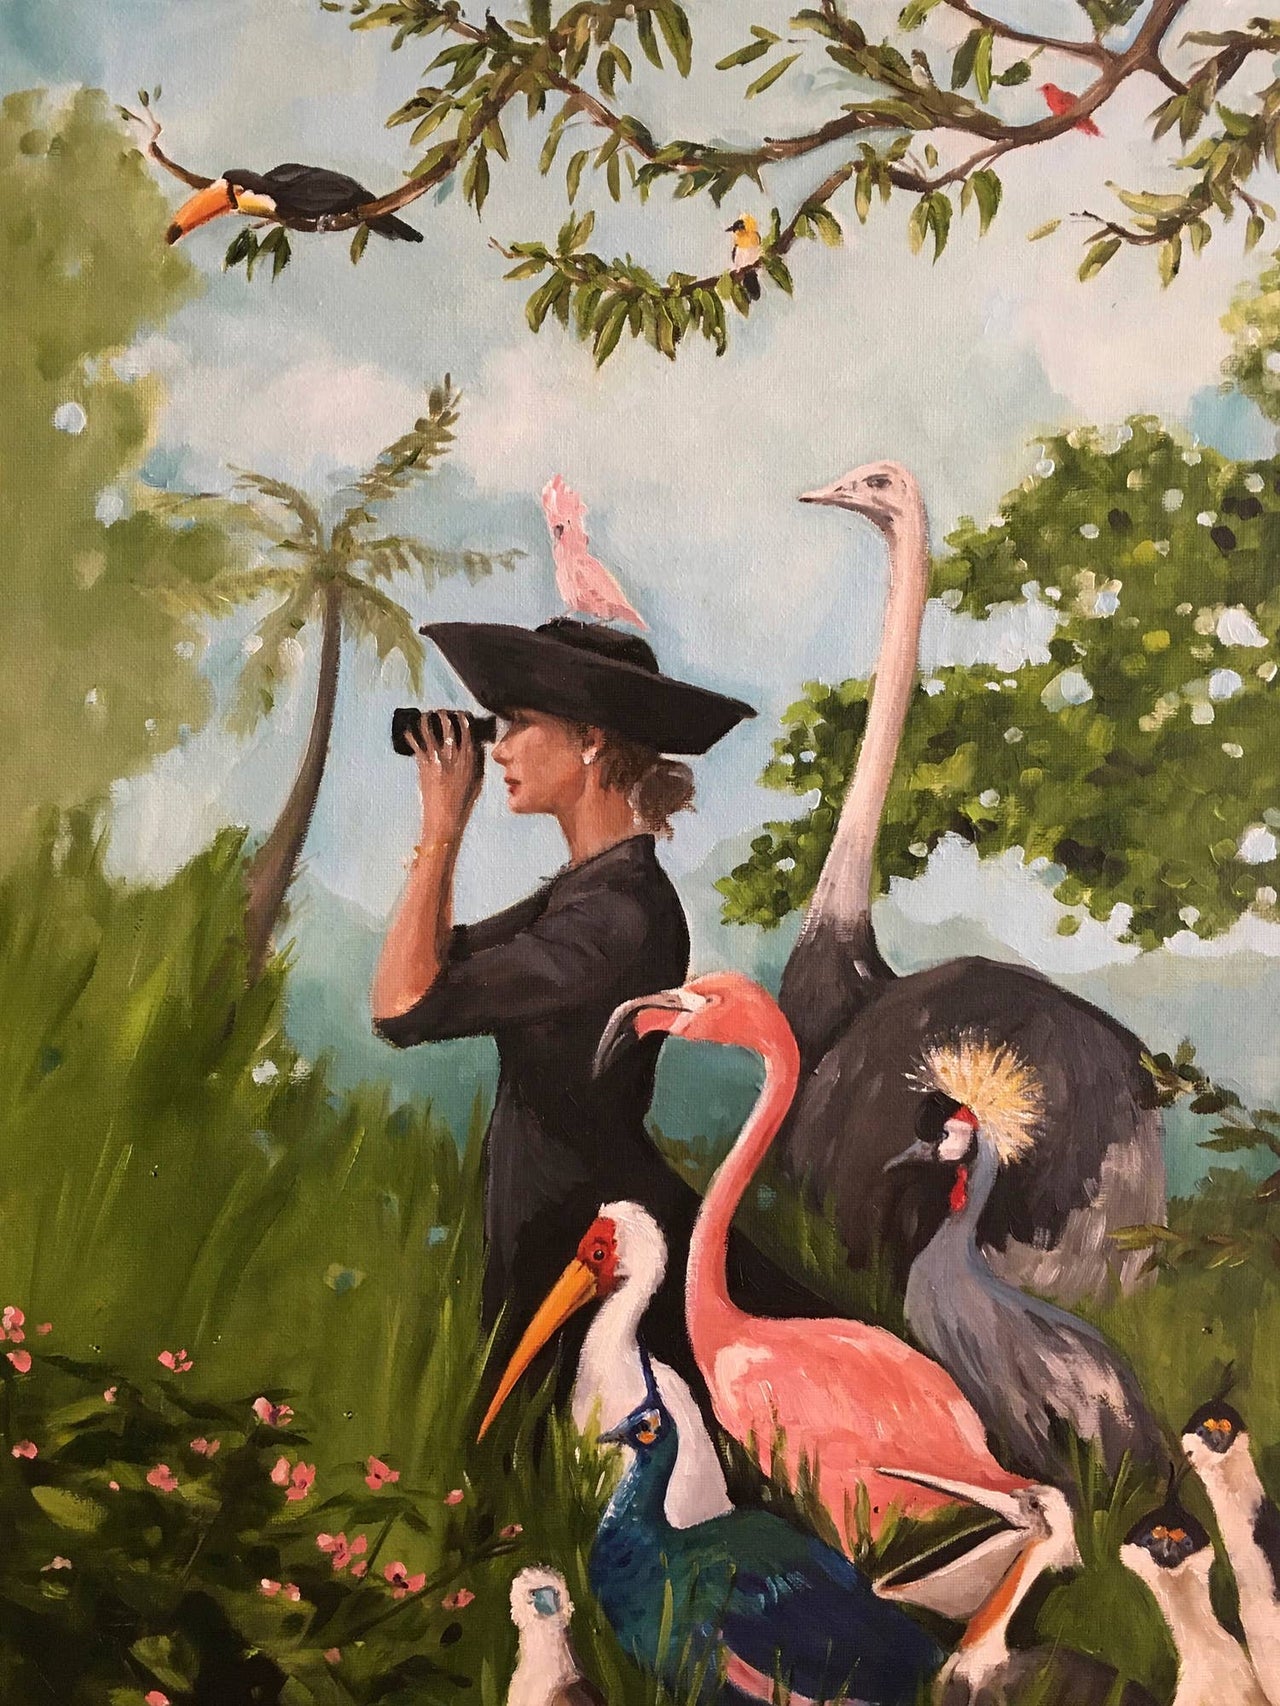 The Birdwatcher Stretched Canvas